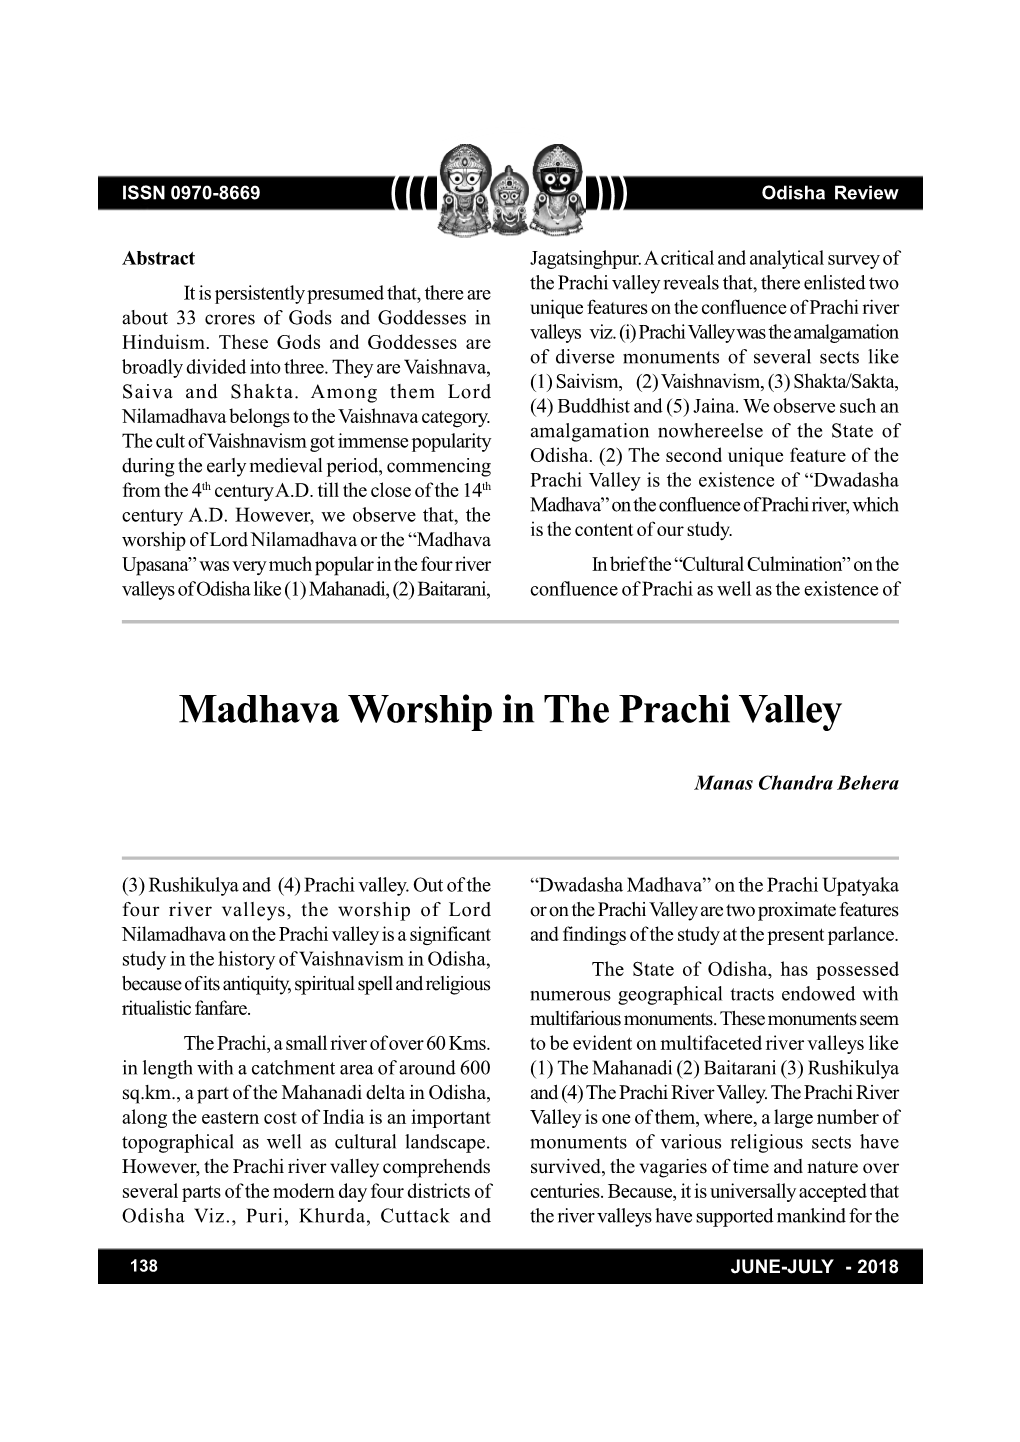 Madhava Worship in the Prachi Valley